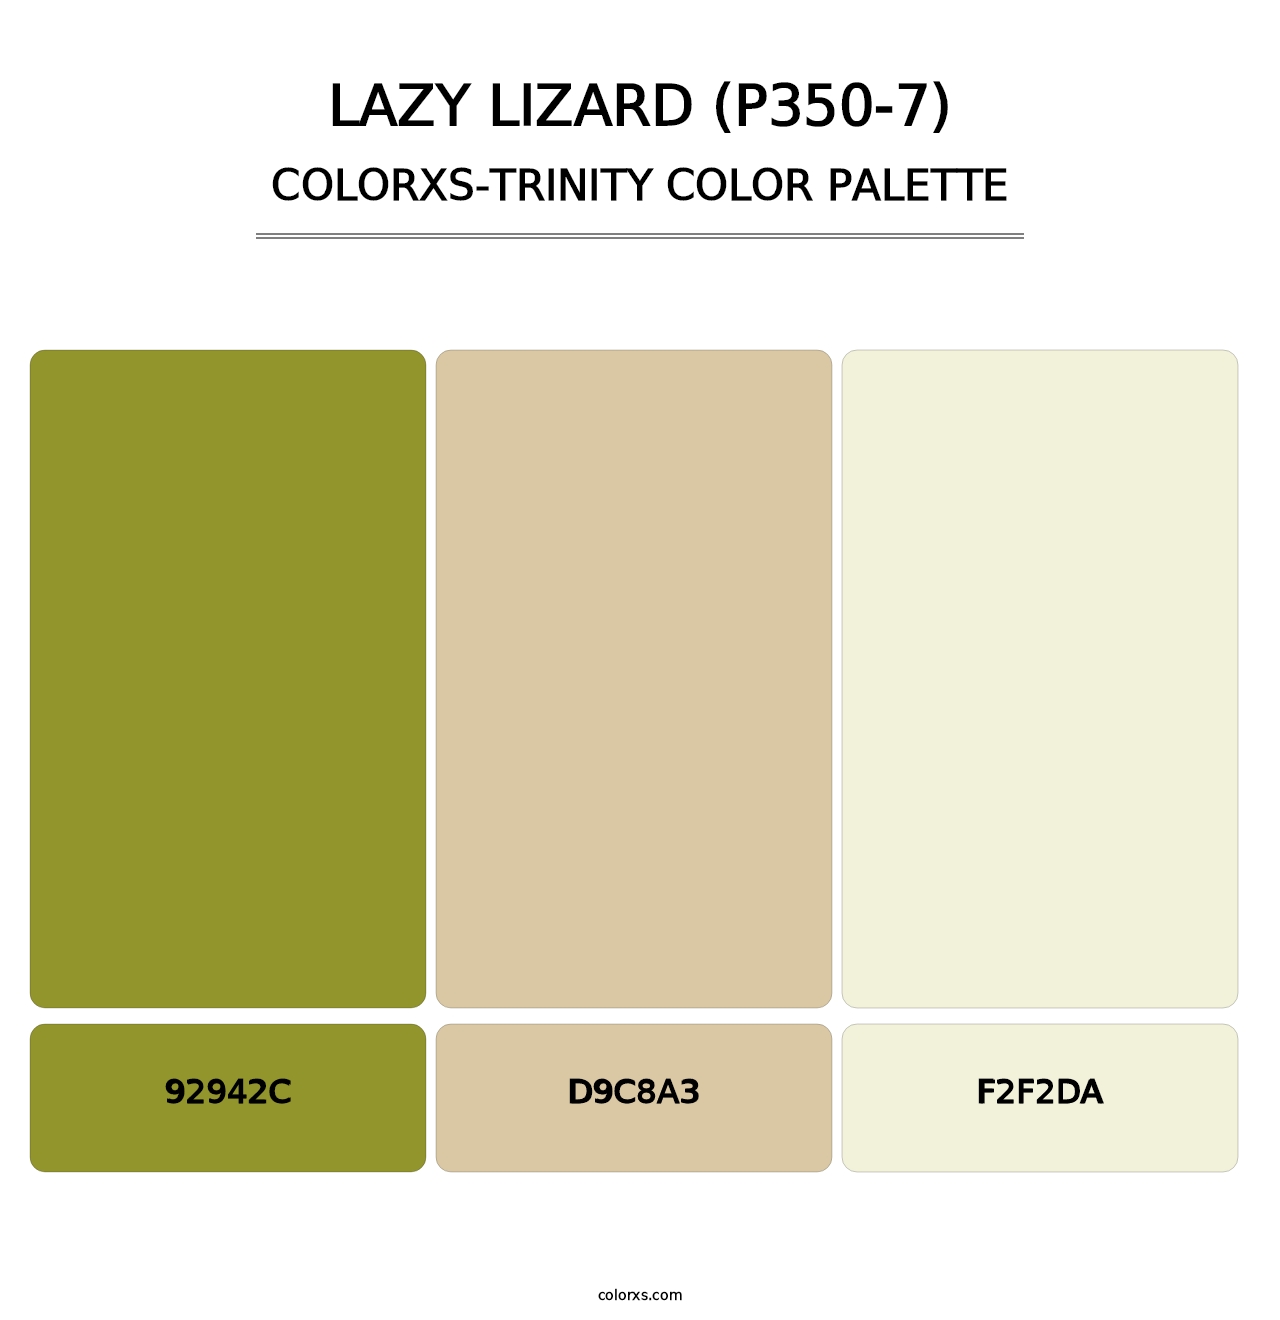 Lazy Lizard (P350-7) - Colorxs Trinity Palette